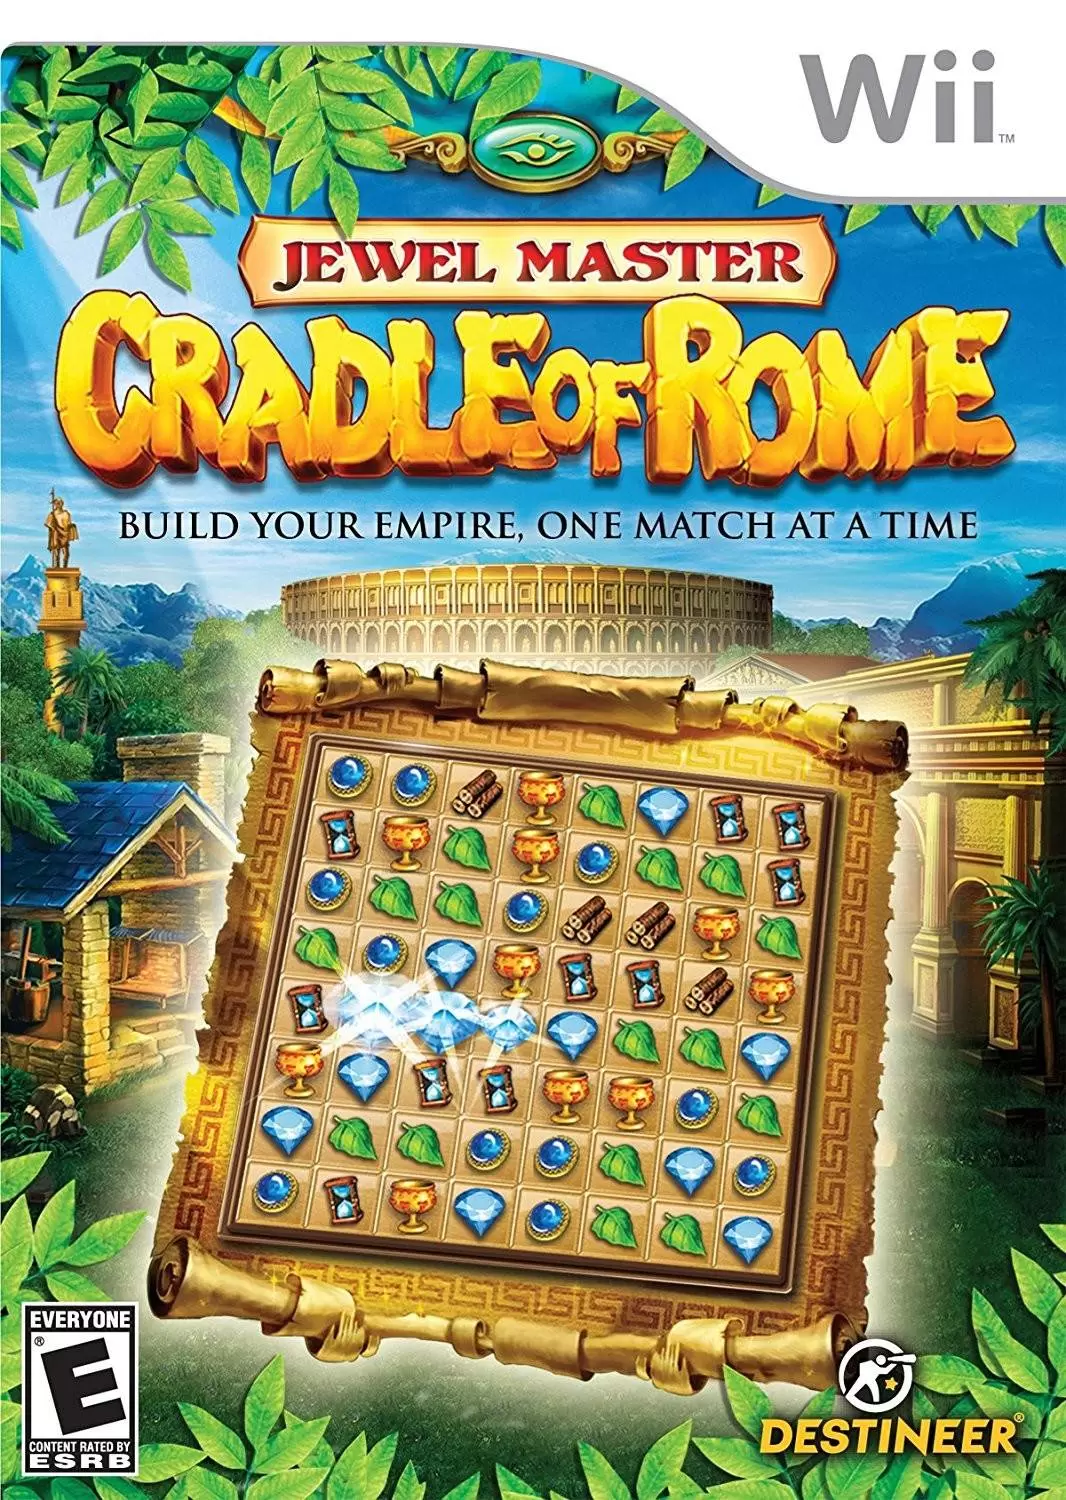 Jeux Nintendo Wii - Jewel Master: Cradle of Rome